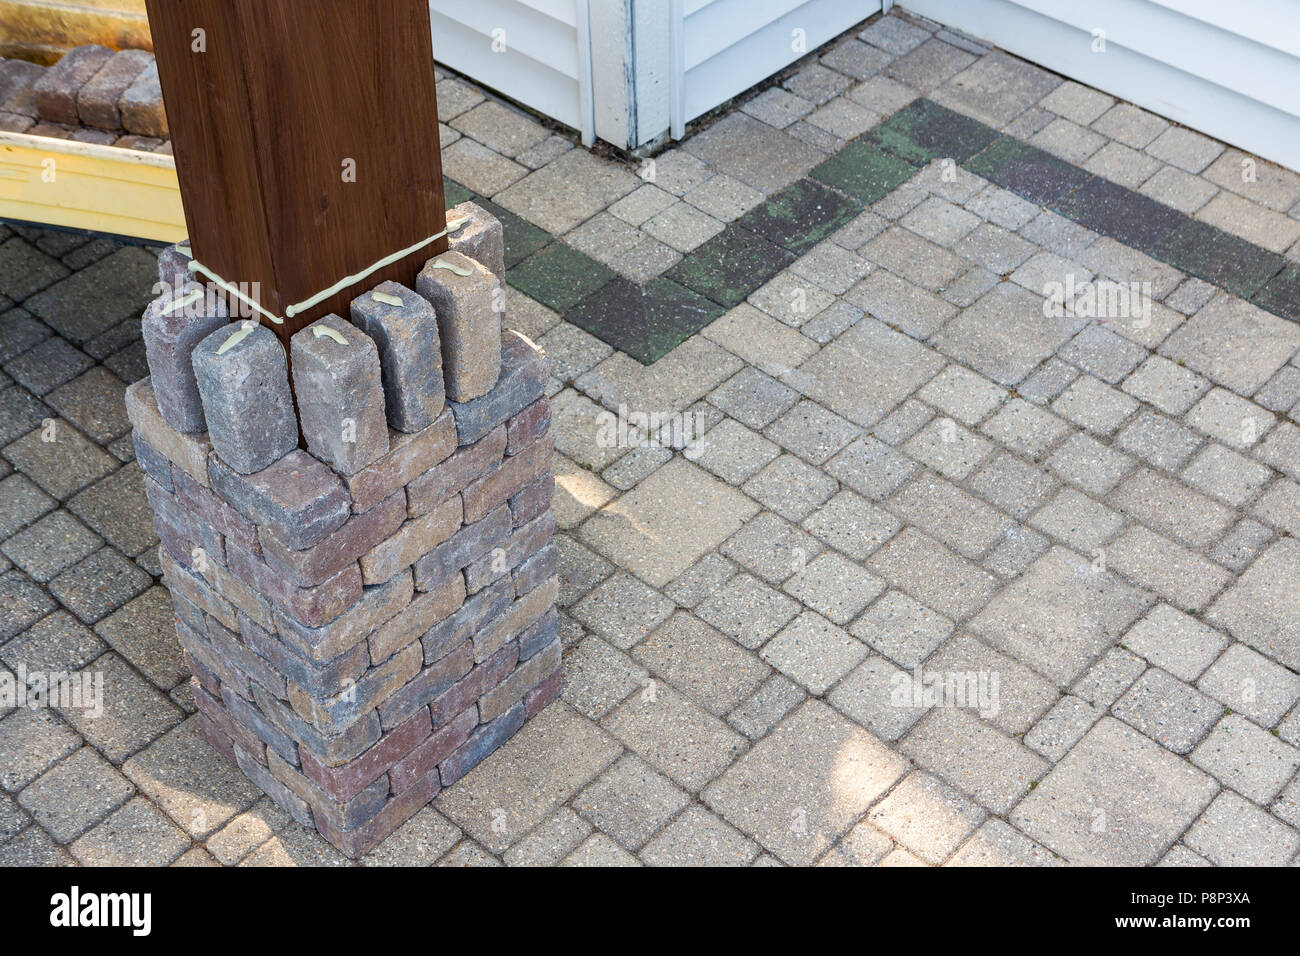 Building a brick pillar around a timber gazebo leg gluing the grey bricks into position in a DIY concept on an exterior paved patio Stock Photo